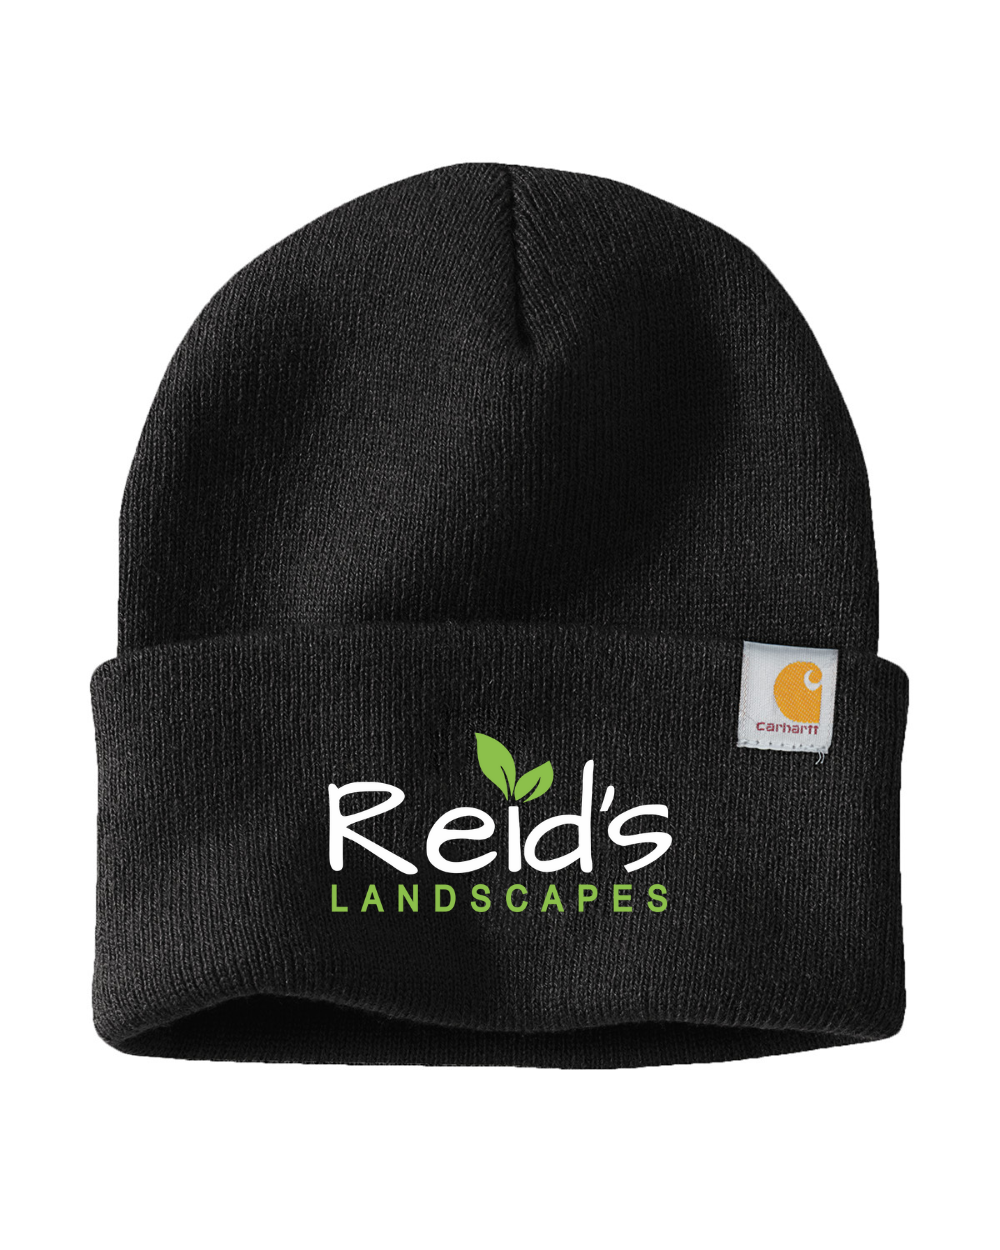 Reid's Landscapes Carhartt Watch Cap